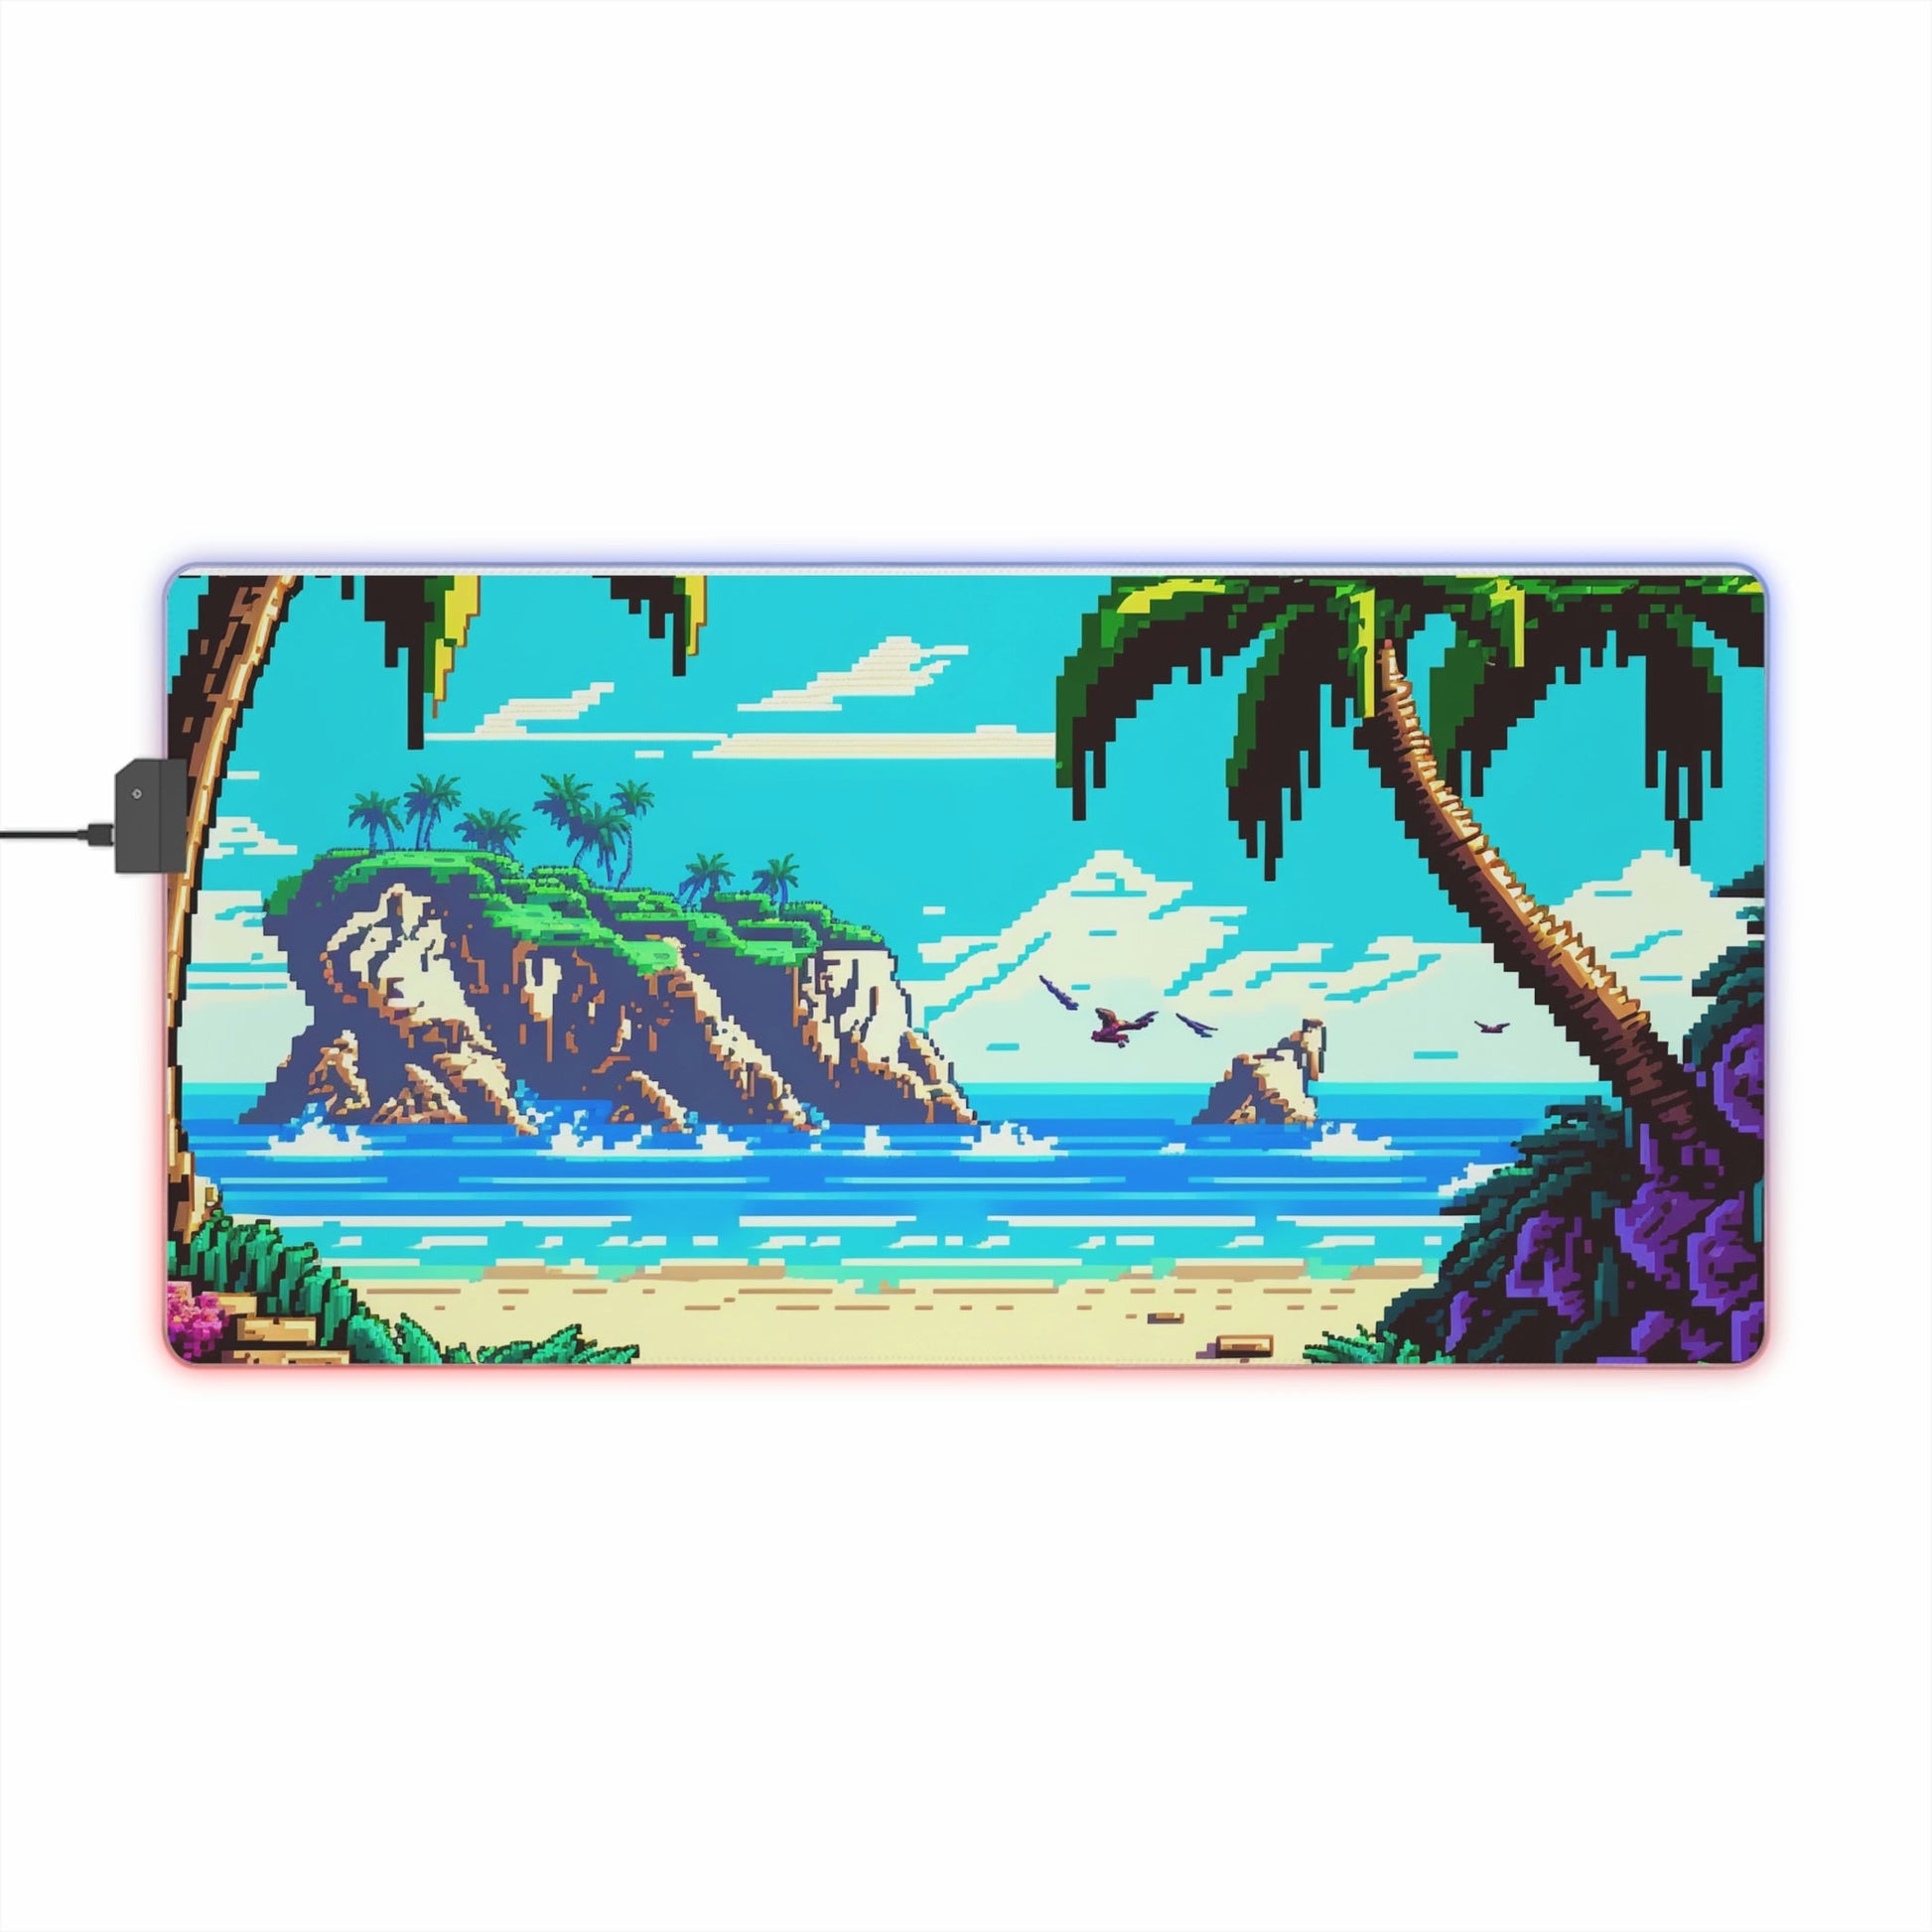 27.6 x 13.8 / Rectangle 15 Pixel Art Tropical Beach LED